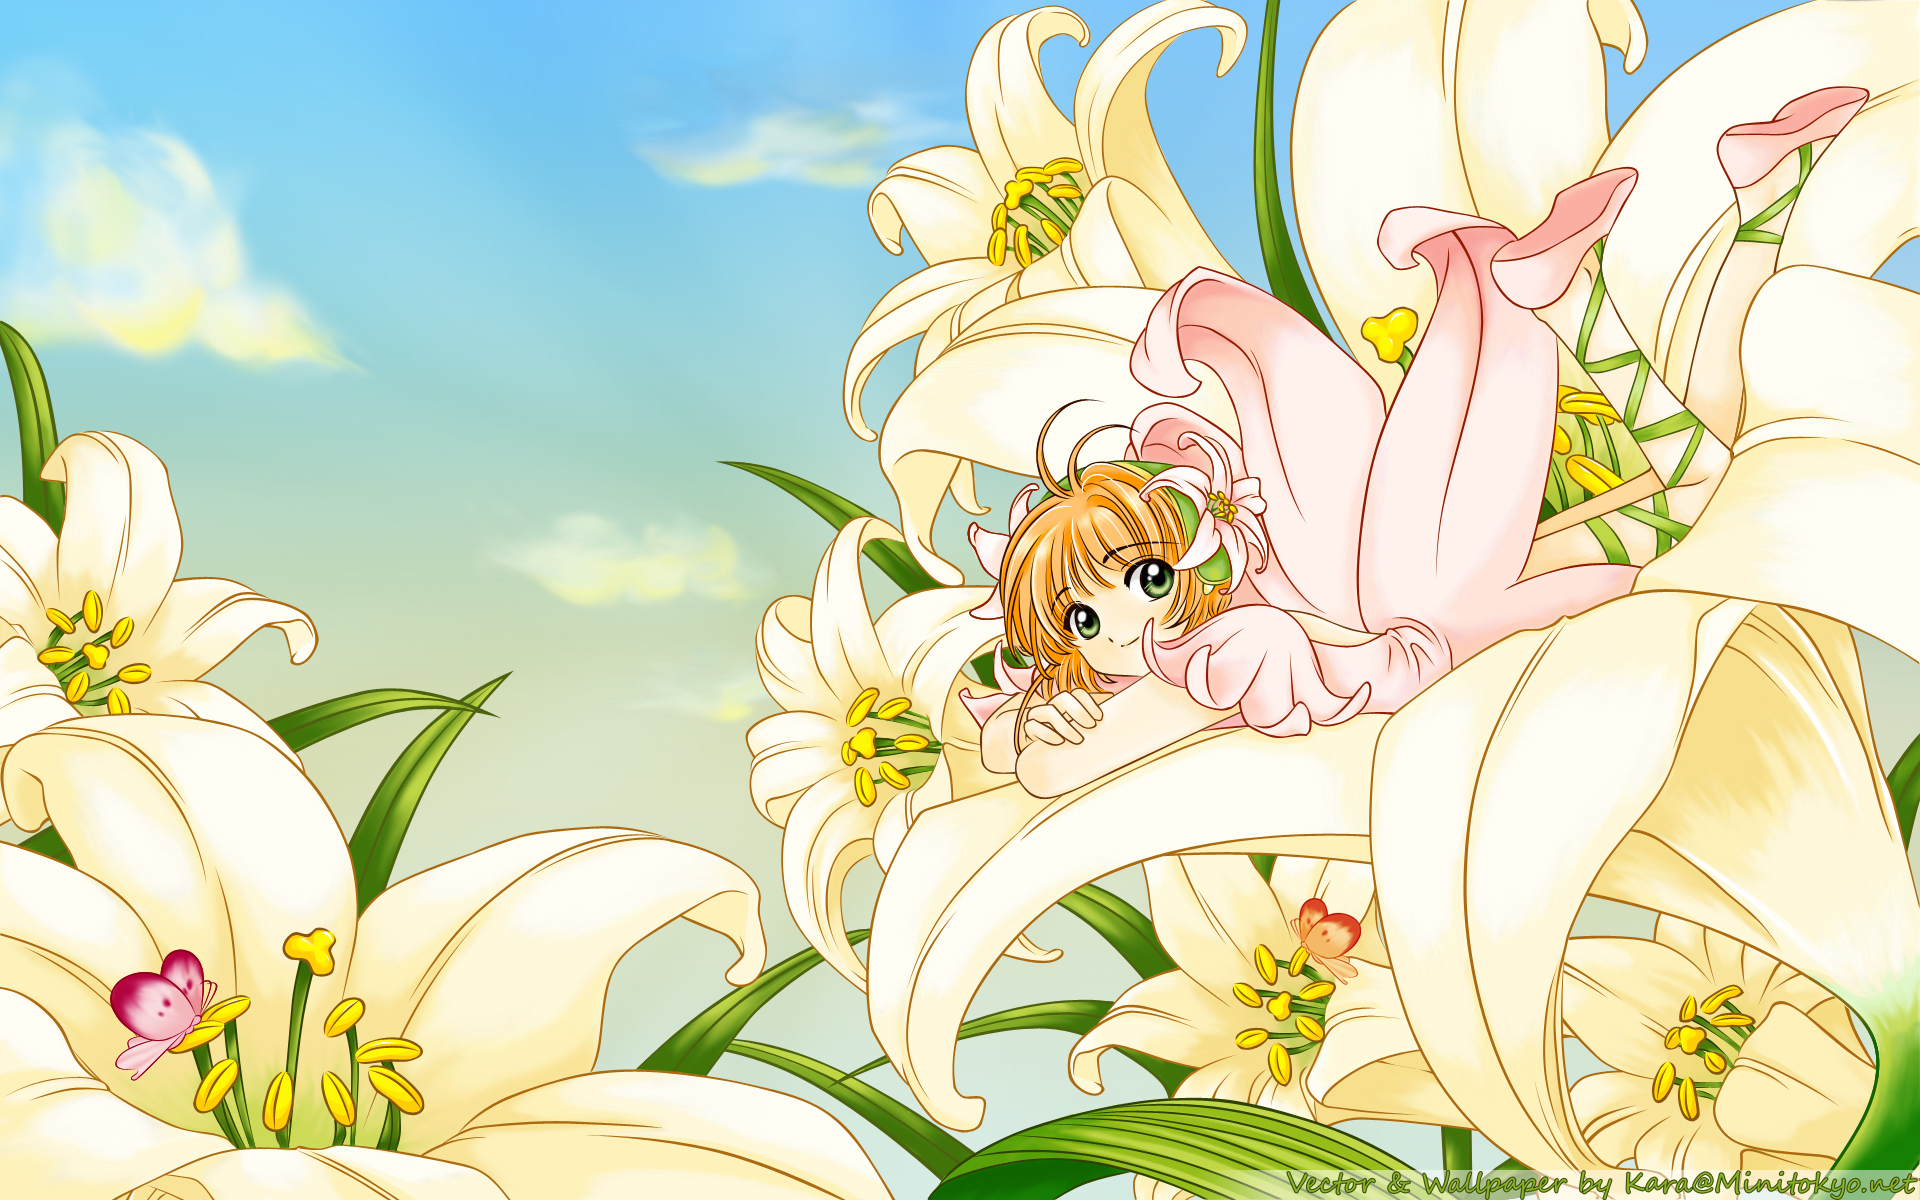 1100 Anime Cardcaptor Sakura HD Wallpapers and Backgrounds